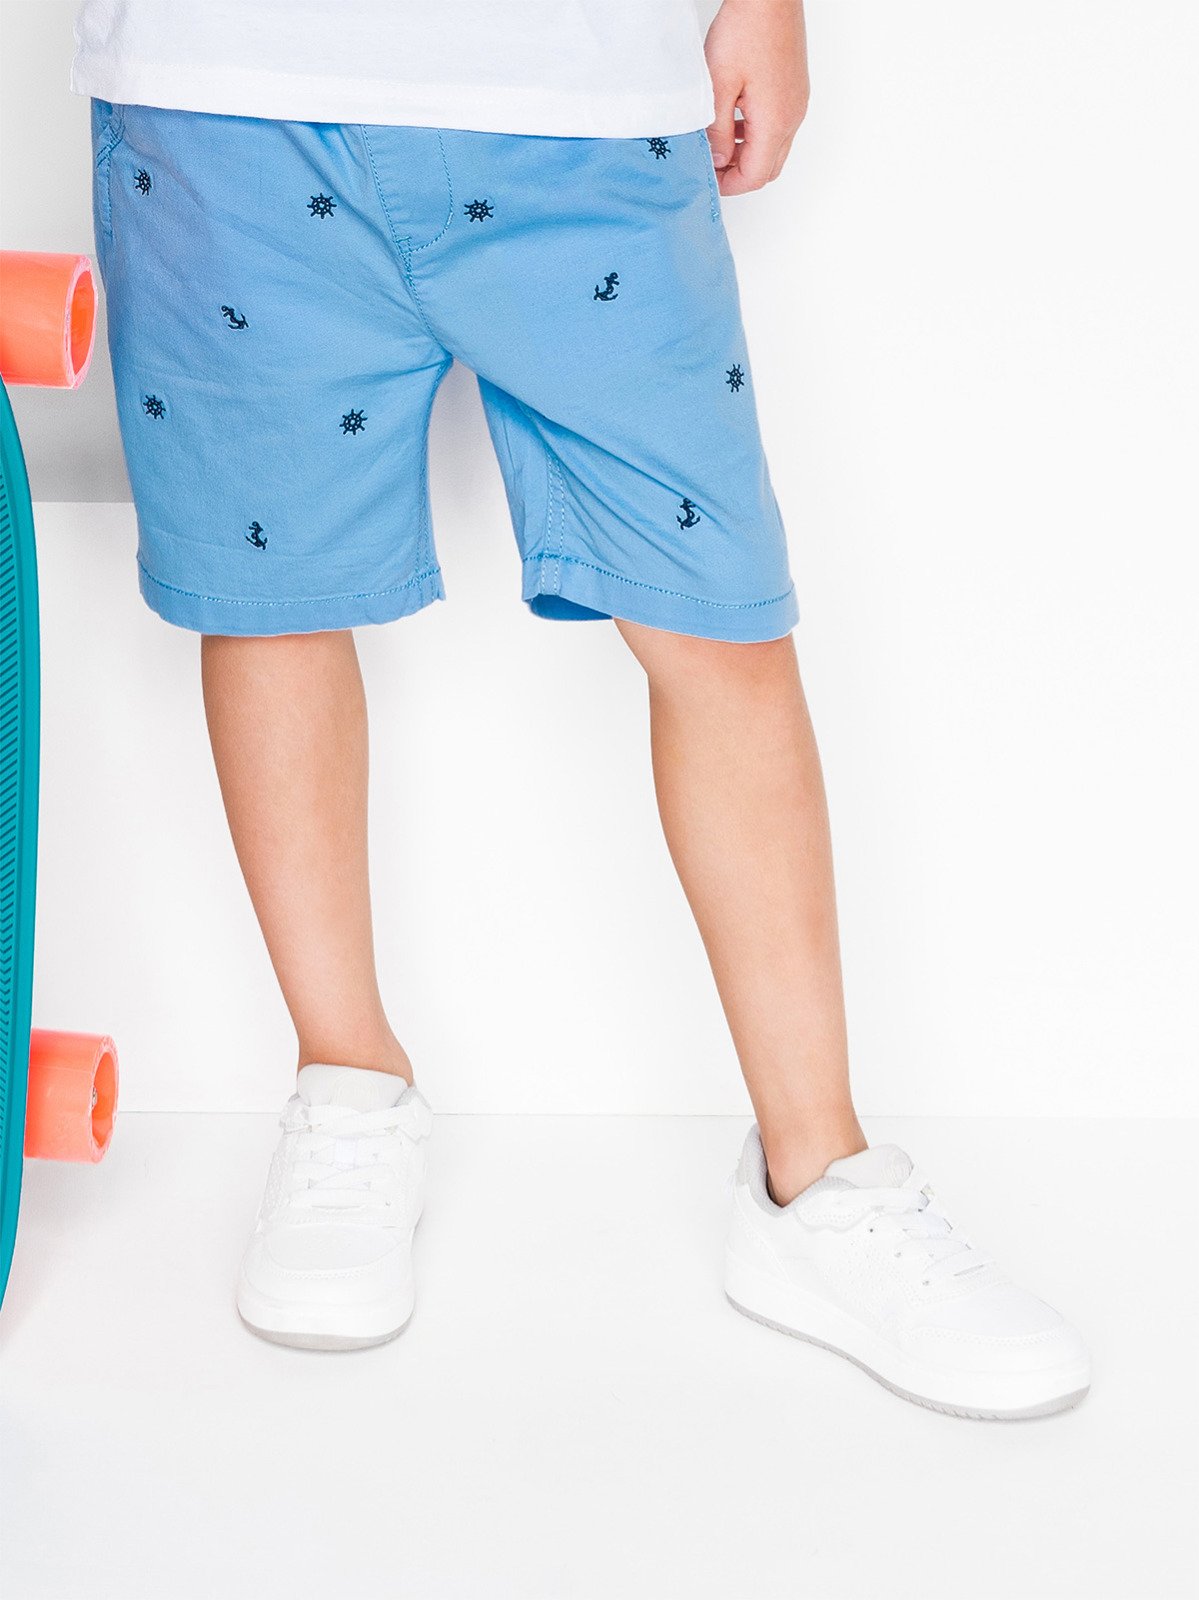 Boy's shorts KP020 - light blue | MODONE wholesale - Clothing For Men